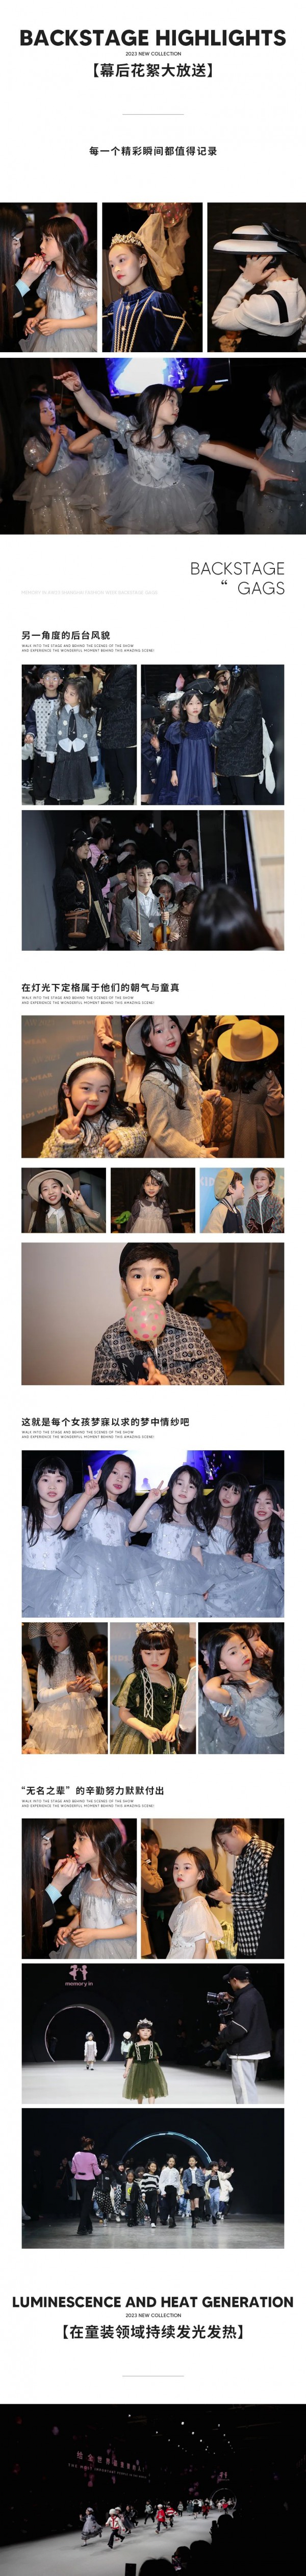 MEMORY IN 兩個小朋友在上海時裝周的第7年